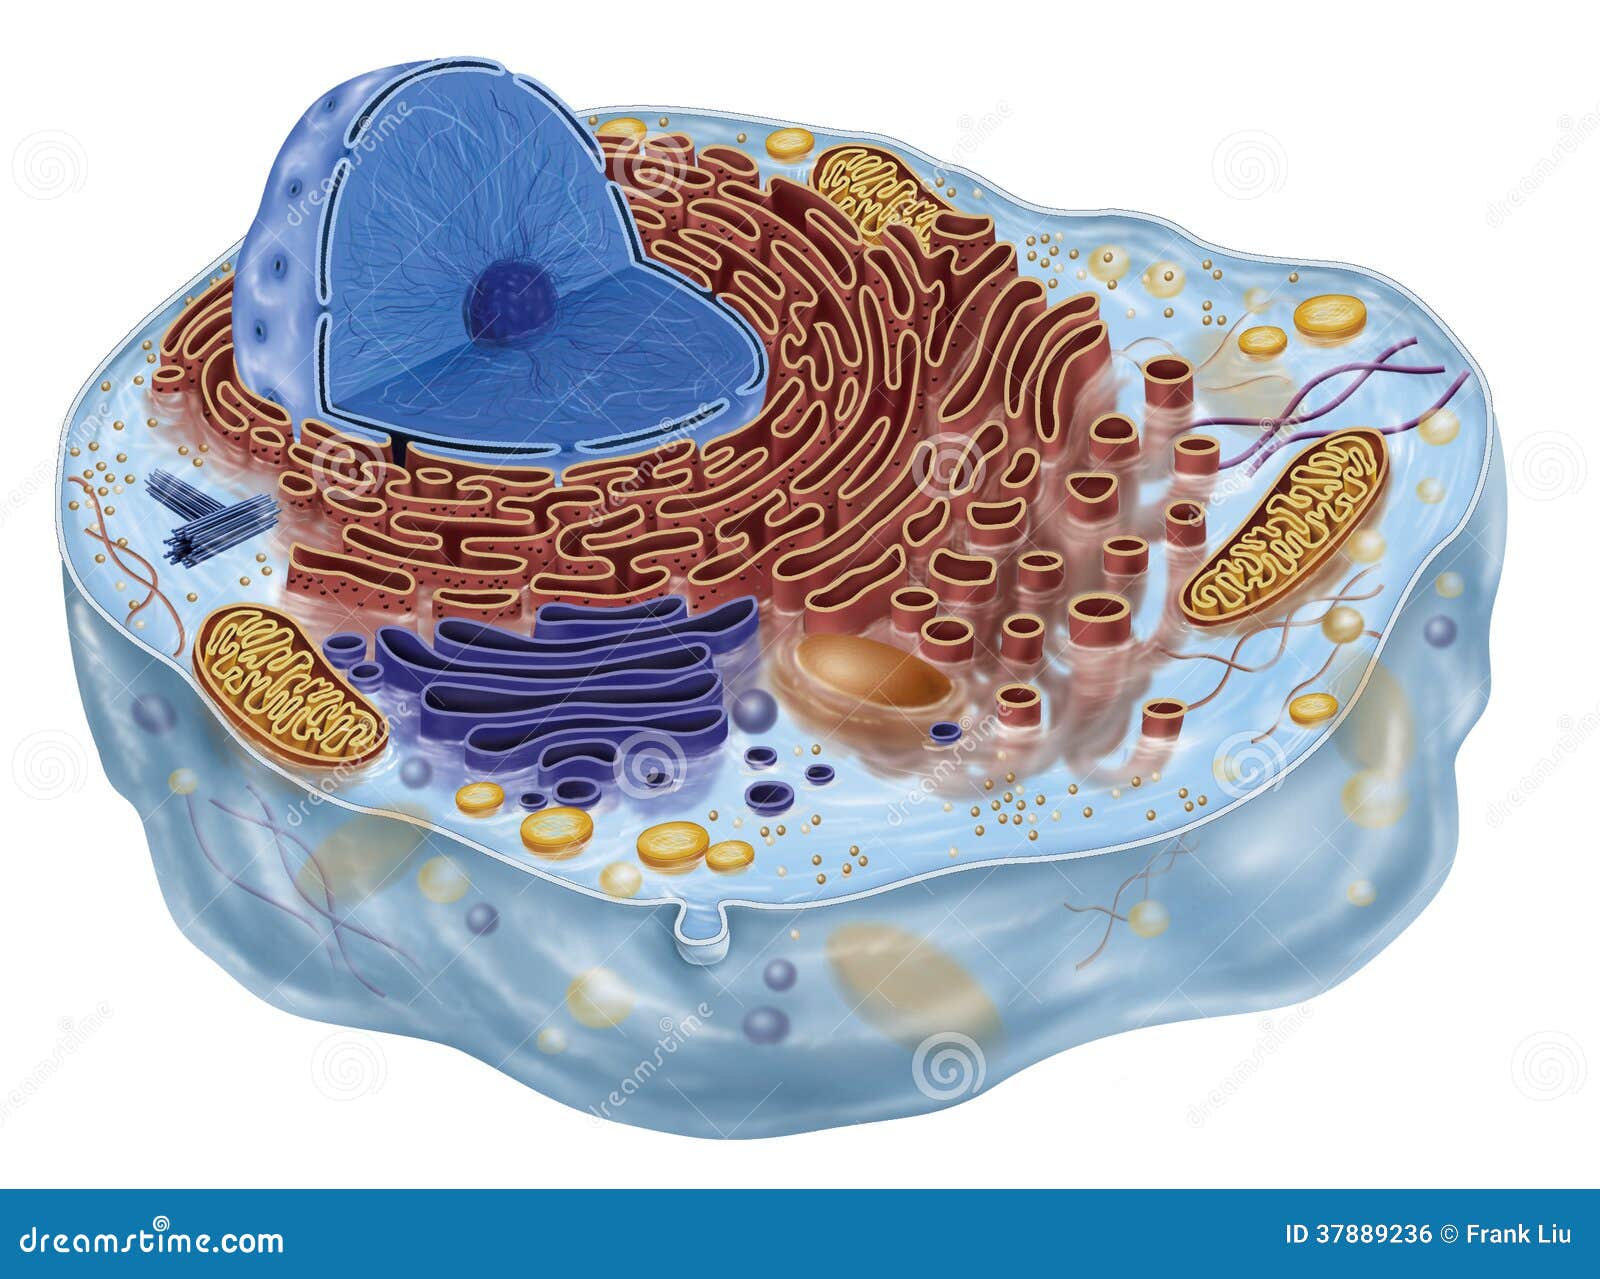 Animal cell stock illustration. Illustration of biological - 37889236